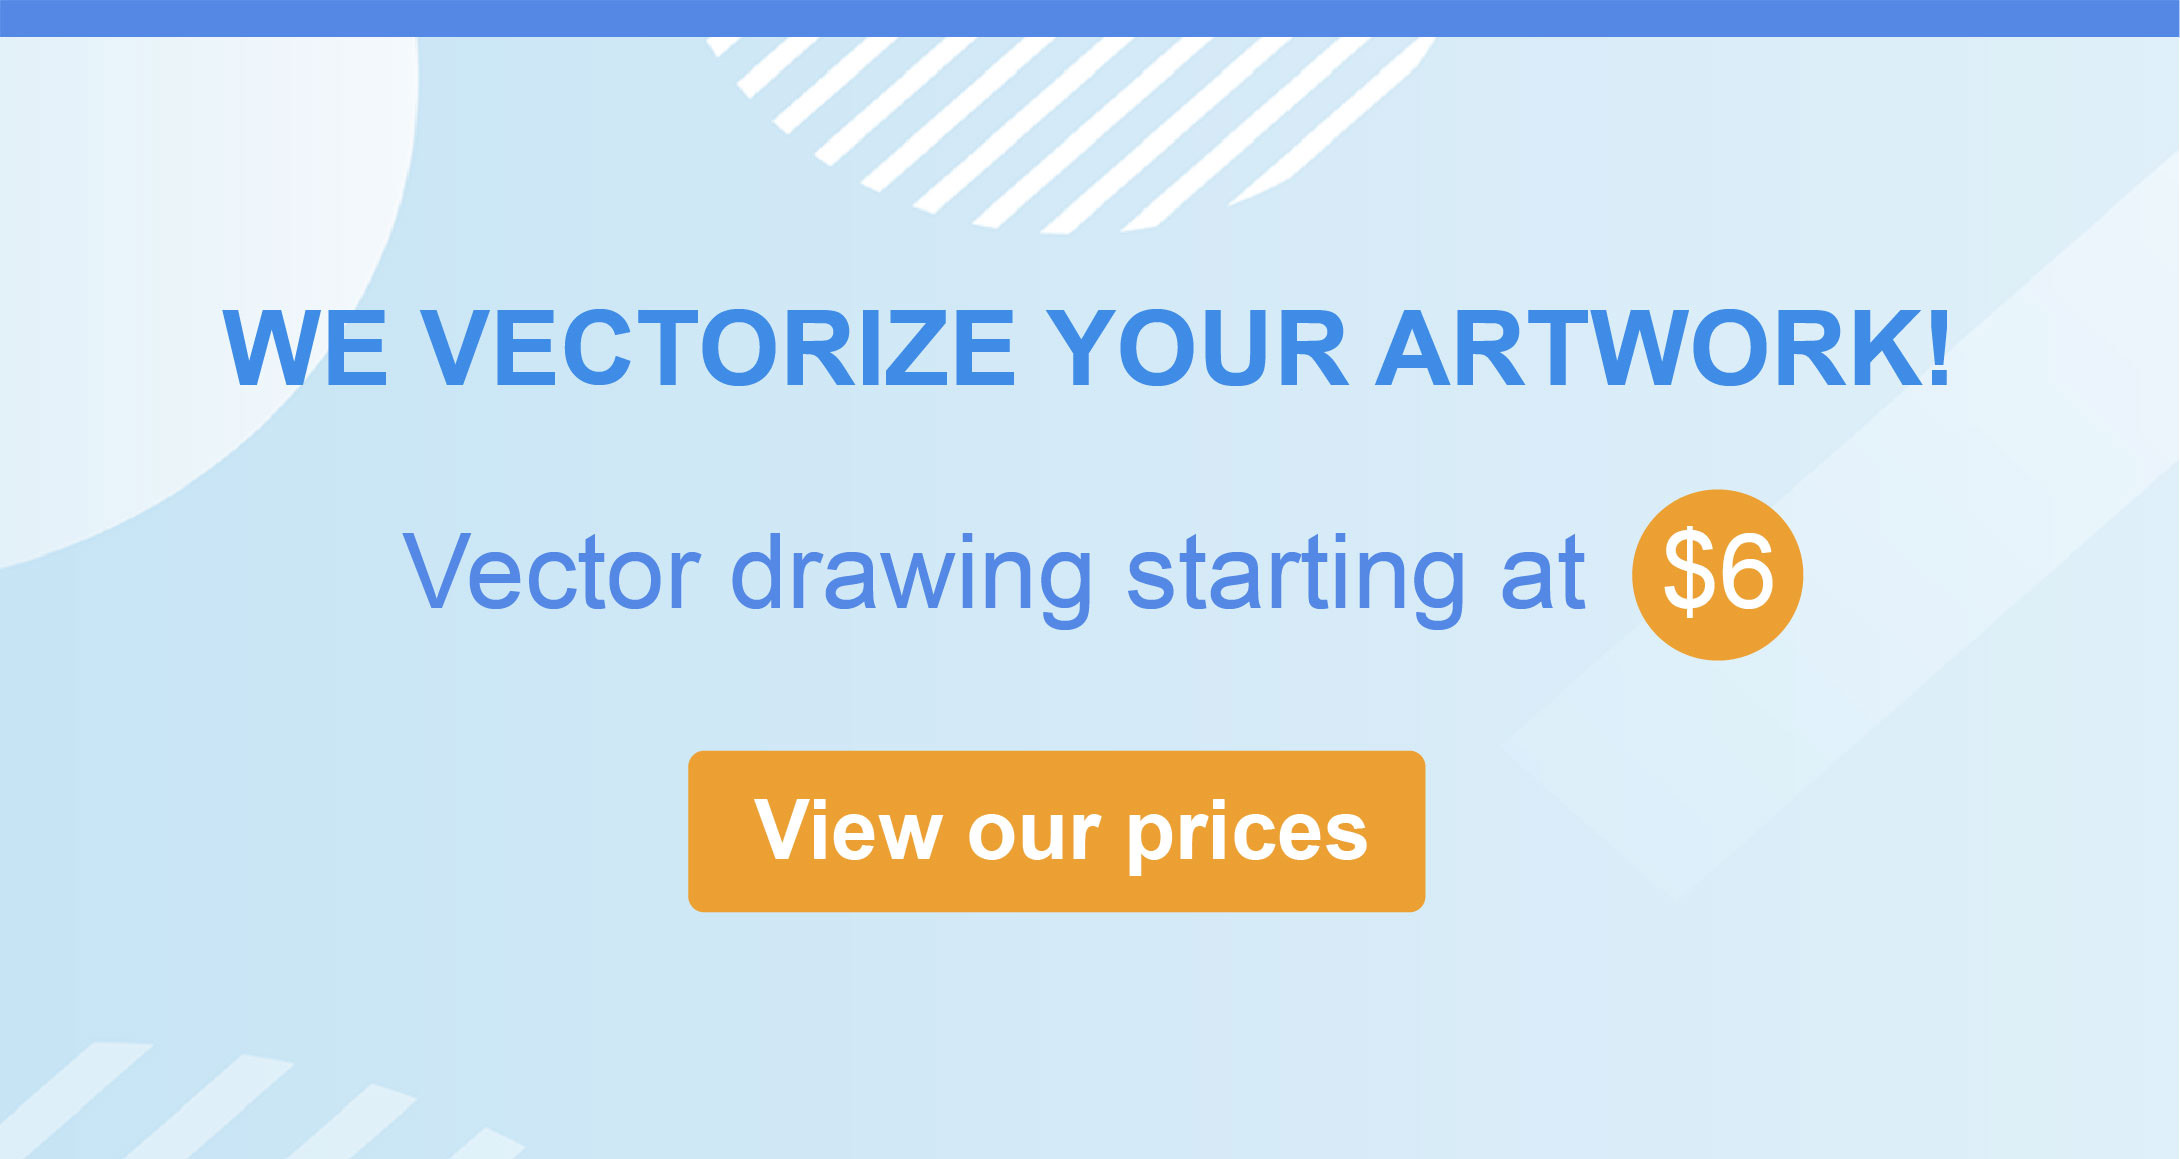 We vectorize your artwork